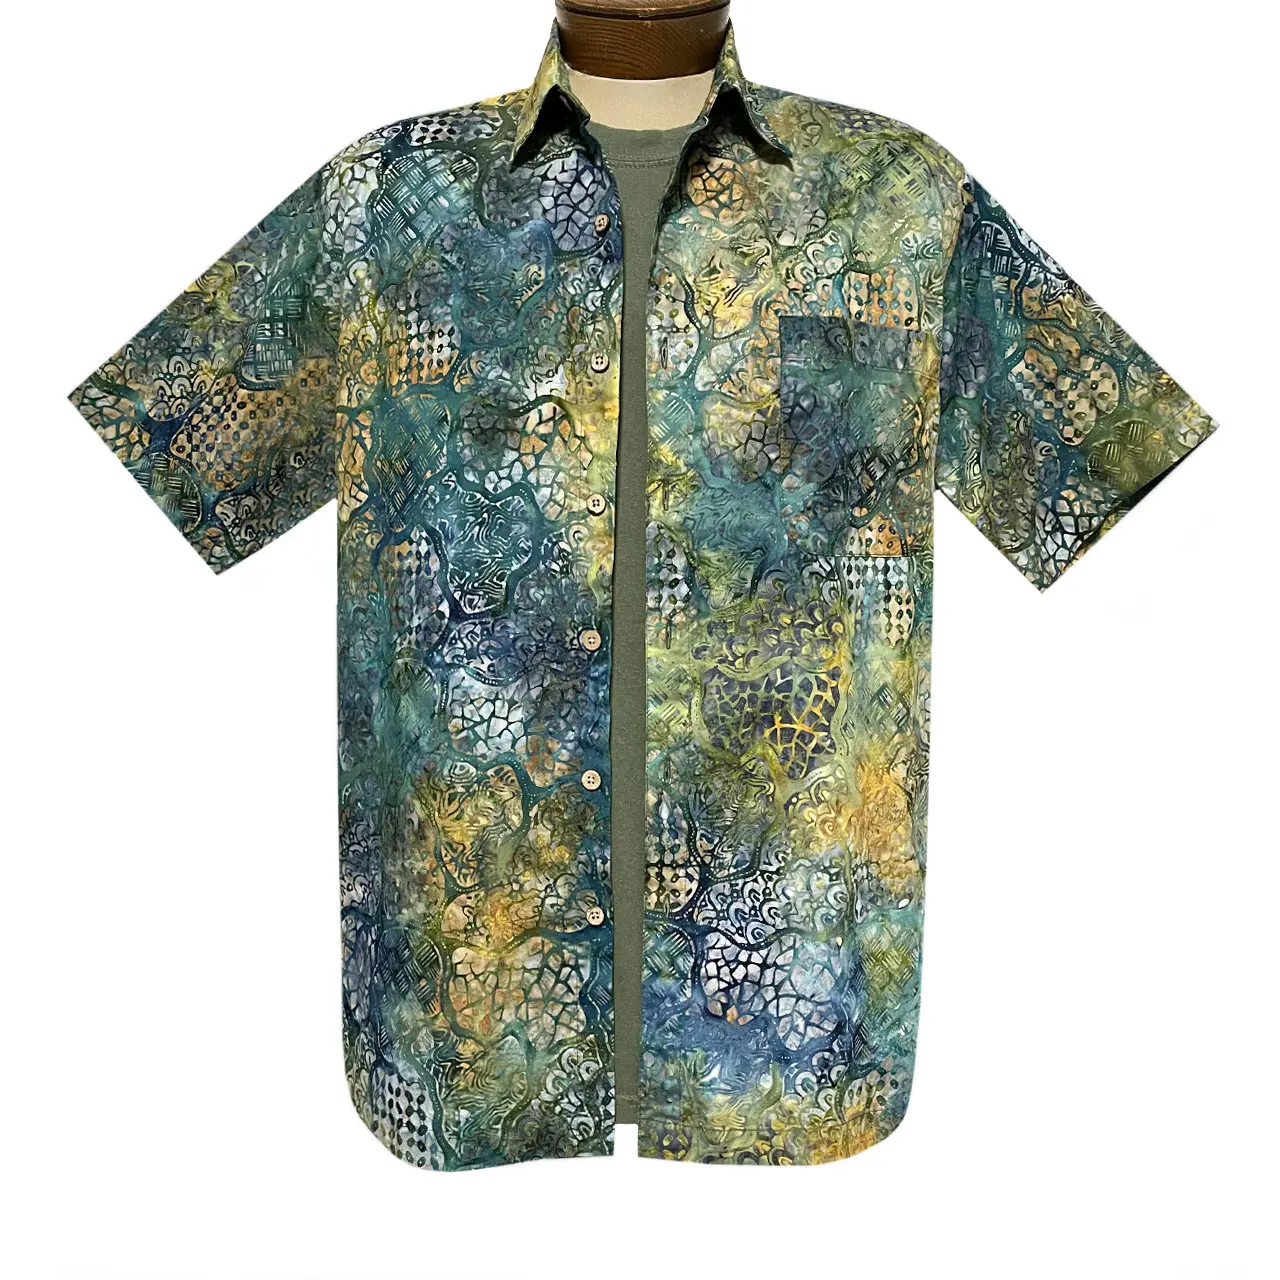 Men\'s Cellular Options - Batik David Abstract (XL, ONLY!) Shirt, Short Sleeve for Cotton 62347-4 Men Green/Gold/Blue R. Richard